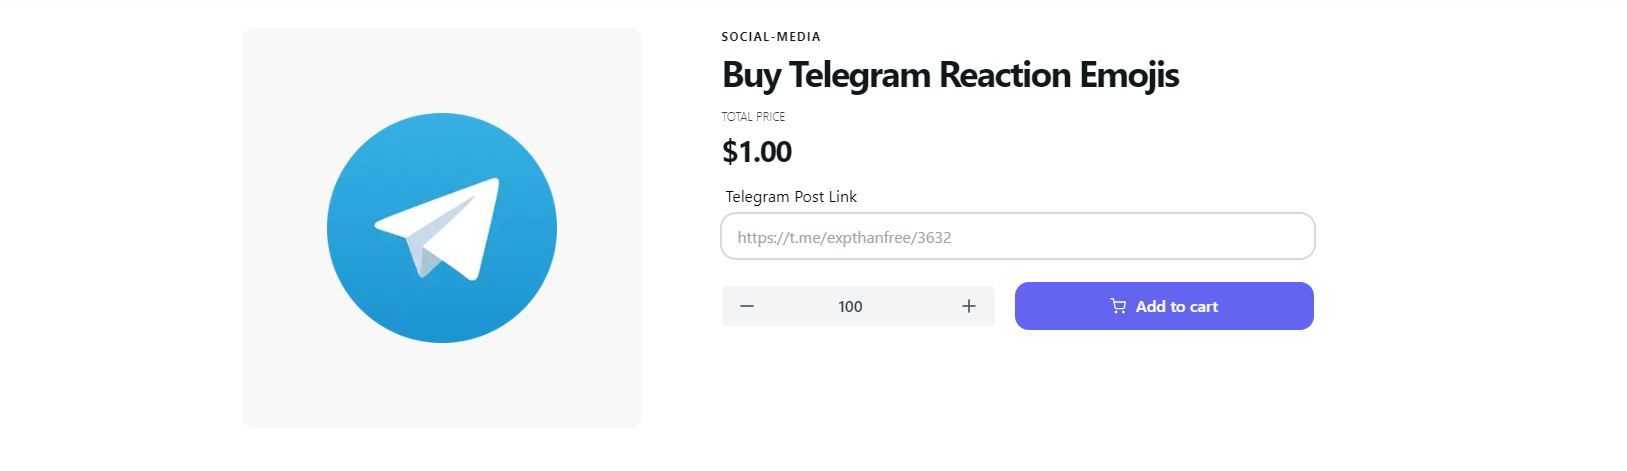 Click here get Telegram Reaction Emojis only $1